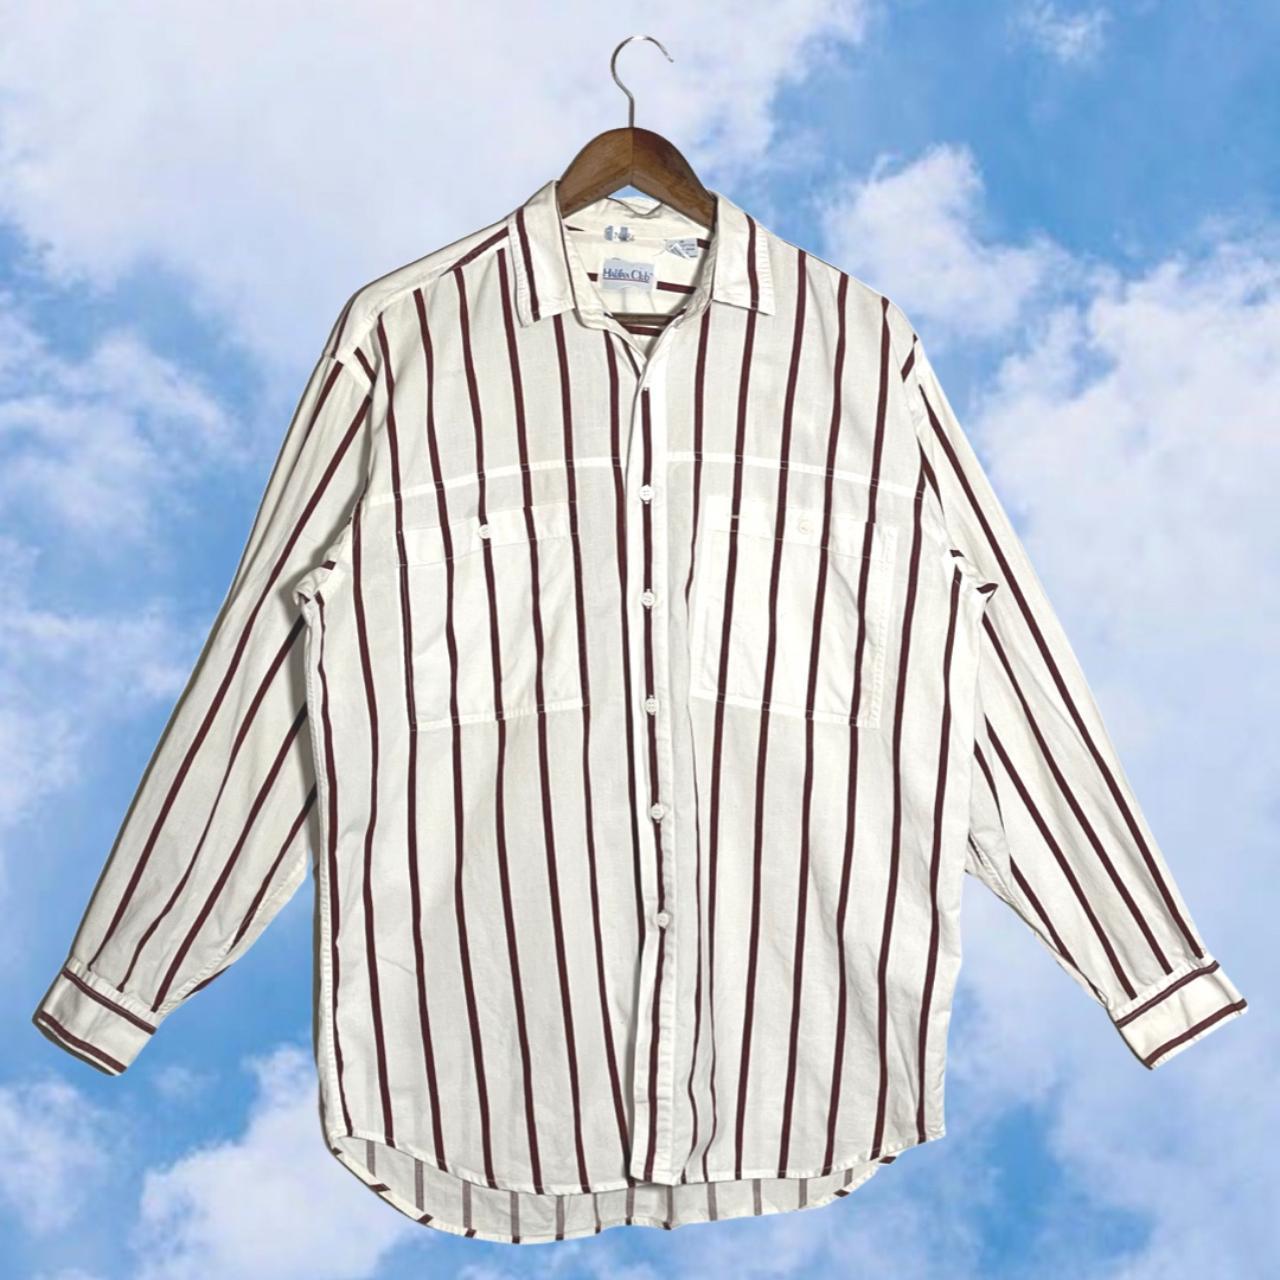 Product Image 1 - Halifax Men's Button Down Shirt

Size